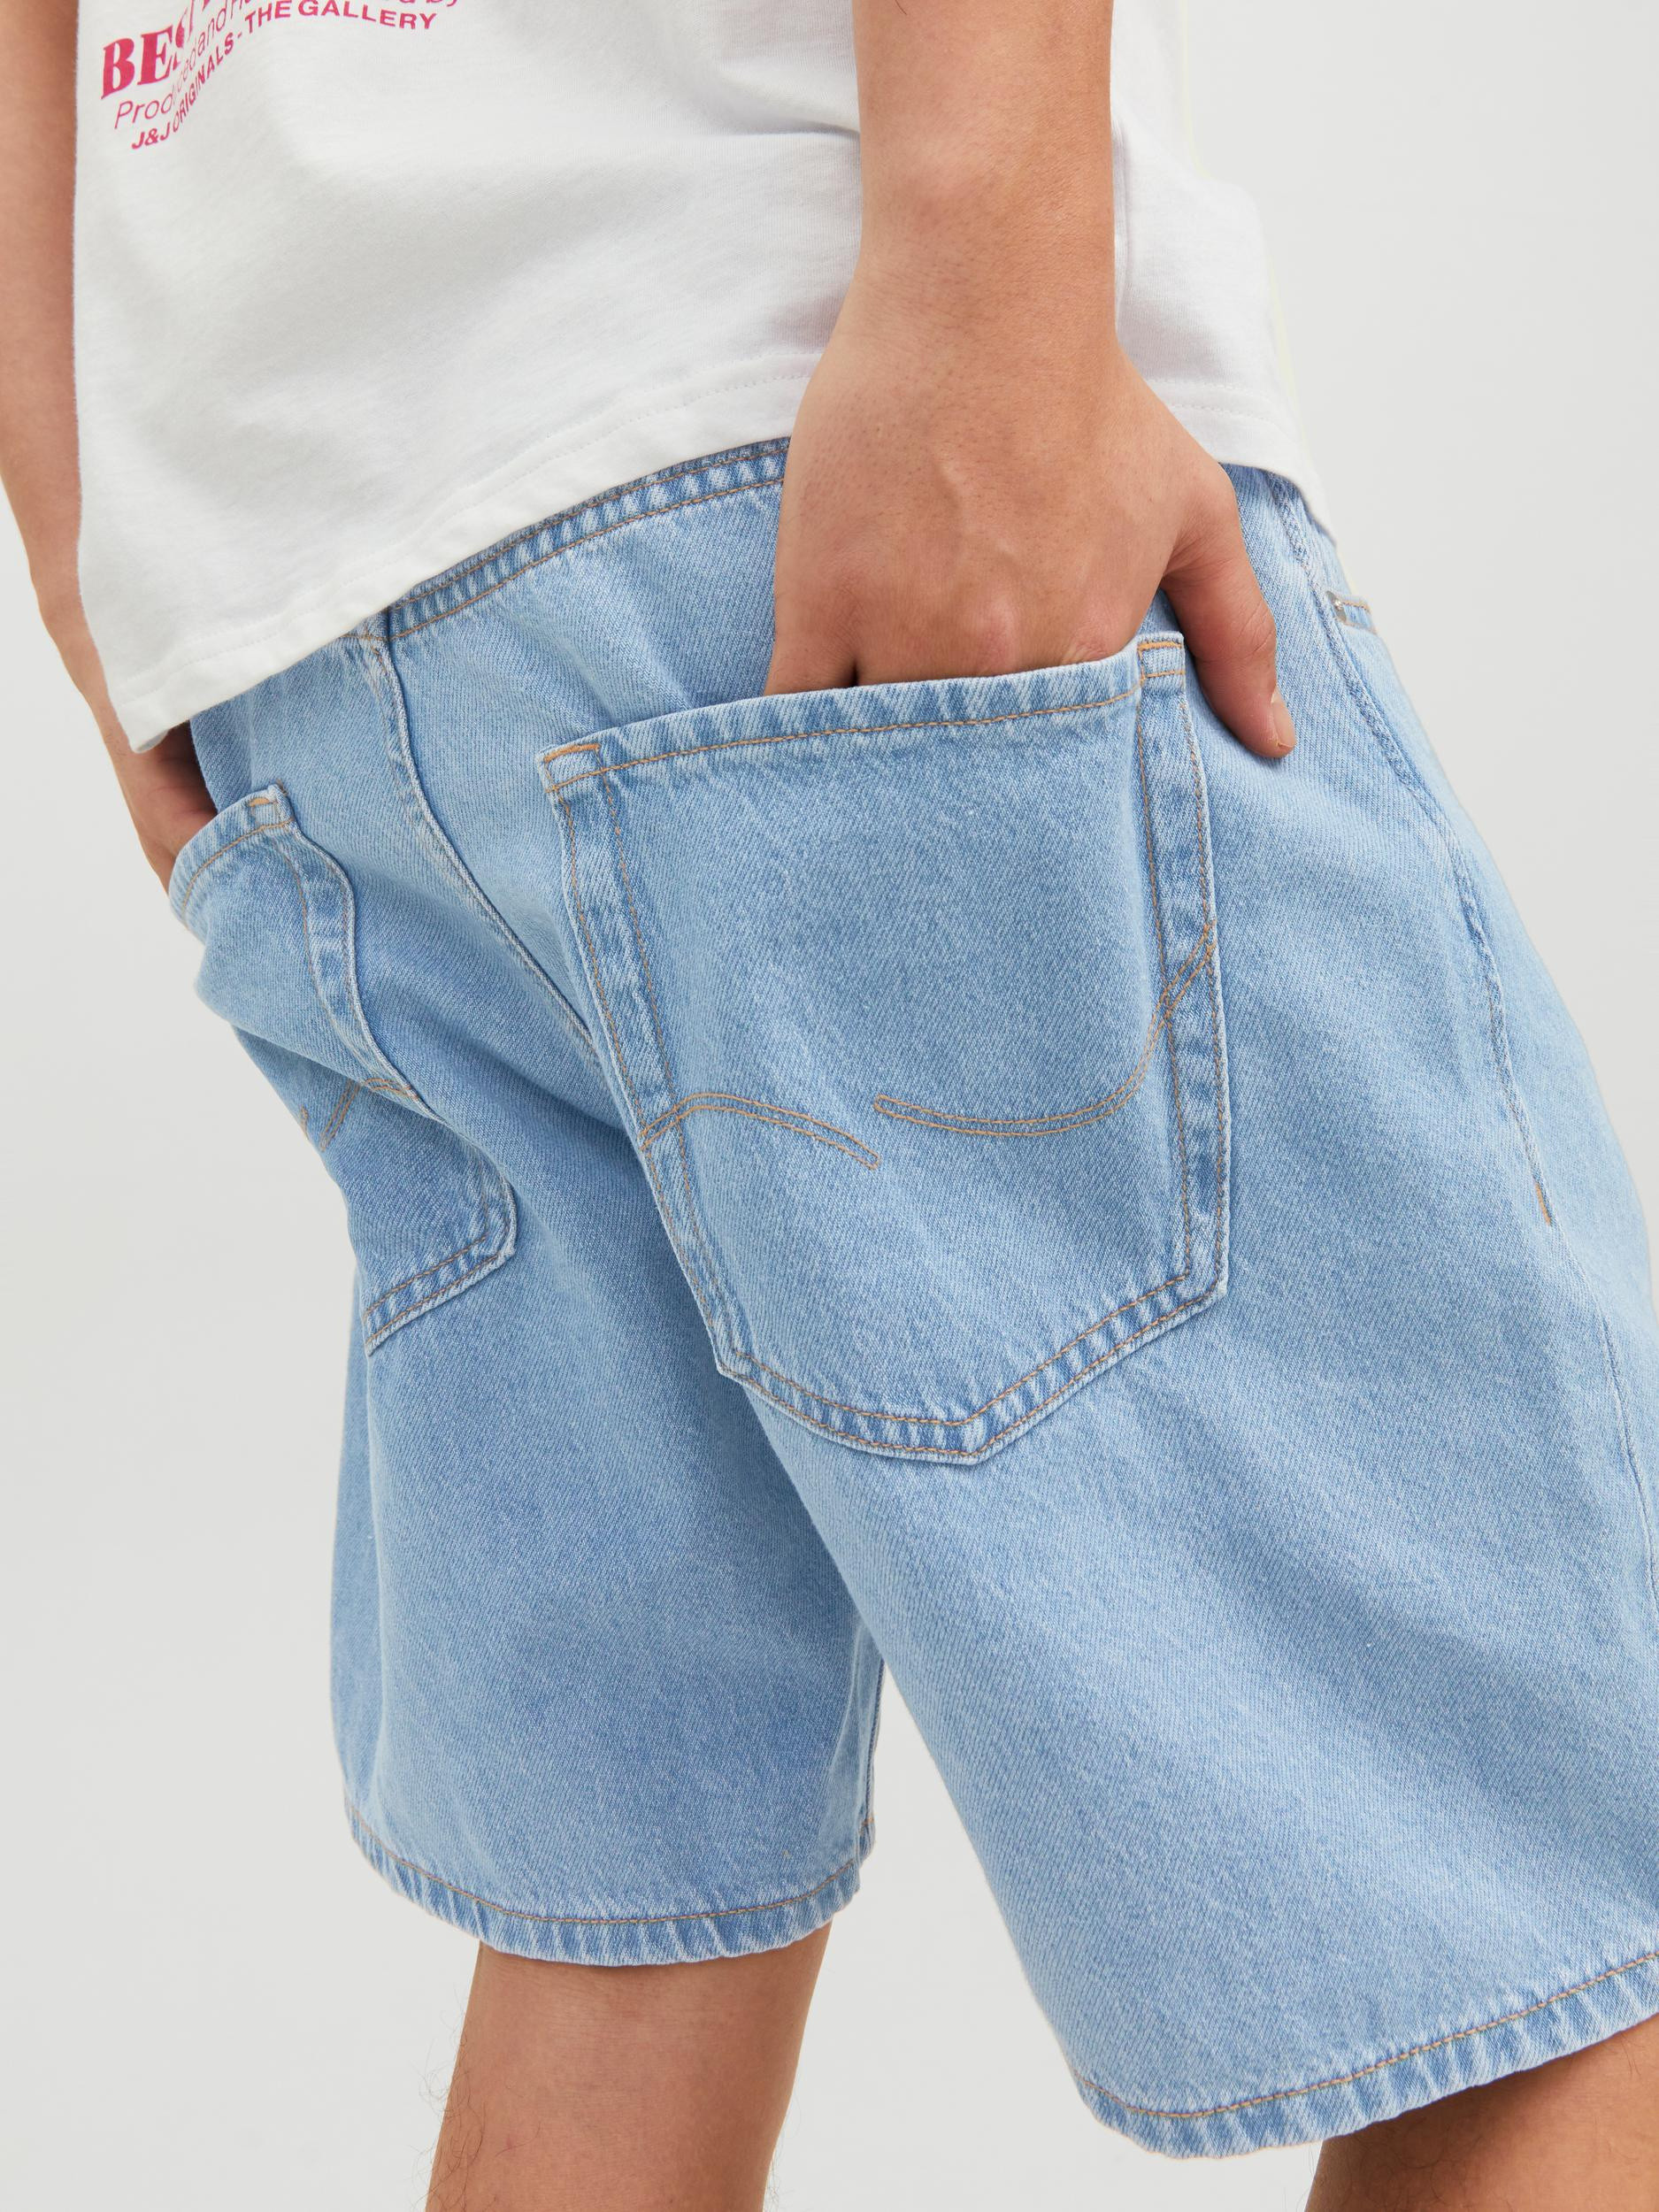 Jack & Jones - Bermuda cinque tasche in jeans, Denim, large image number 4